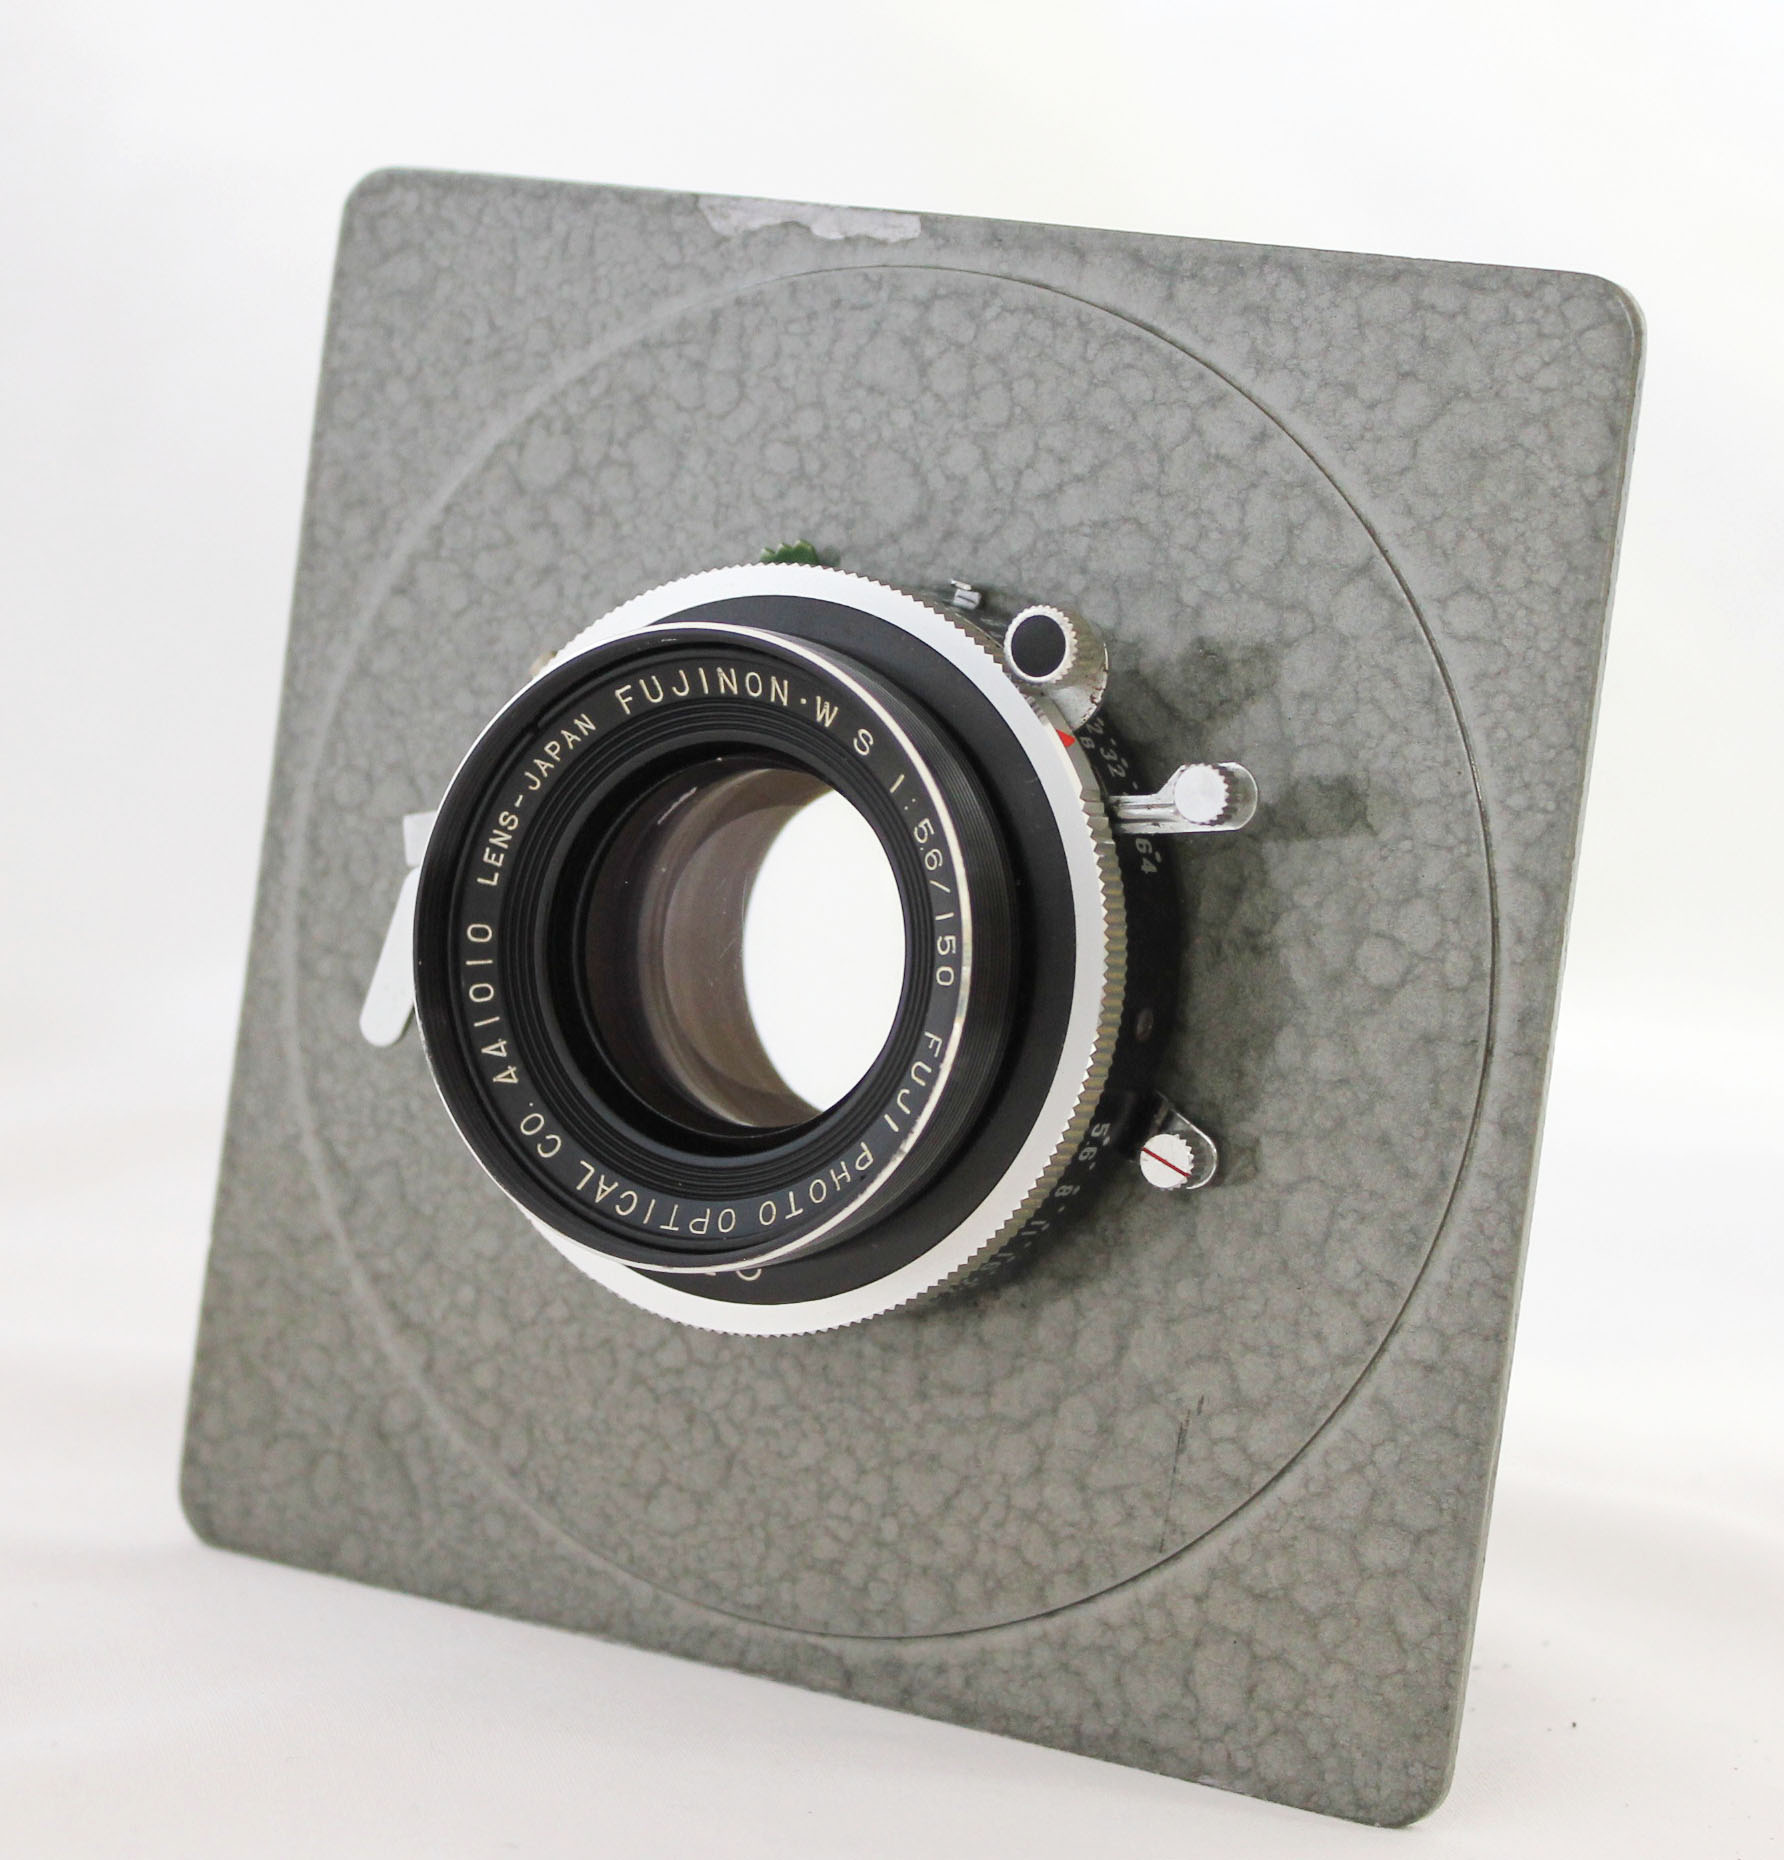 Fuji Fujinon W S 150mm F/5.6 Large Format Lens Seiko Shutter from Japan Photo 0